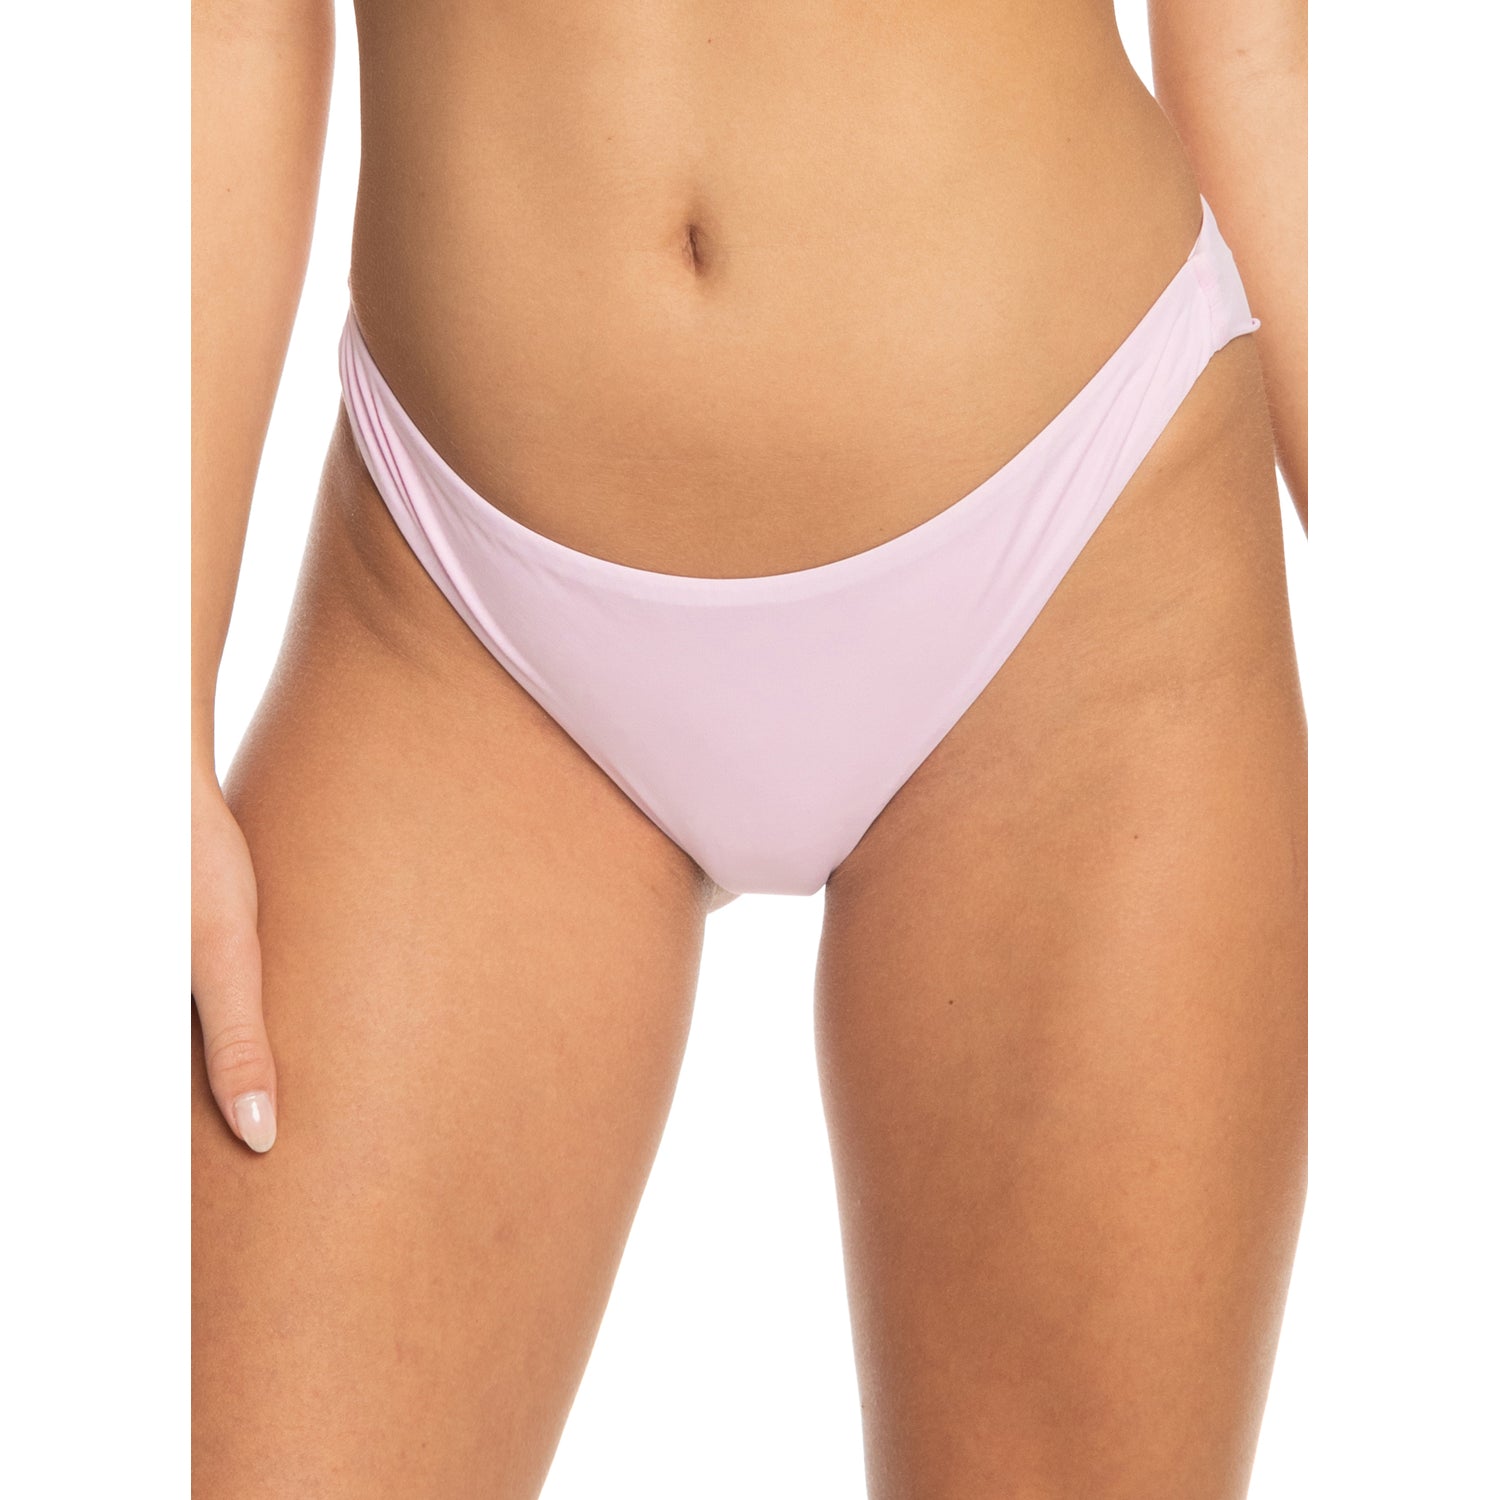 Roxy Beach Classics Cheeky Bikini Bottom MFD0 XS